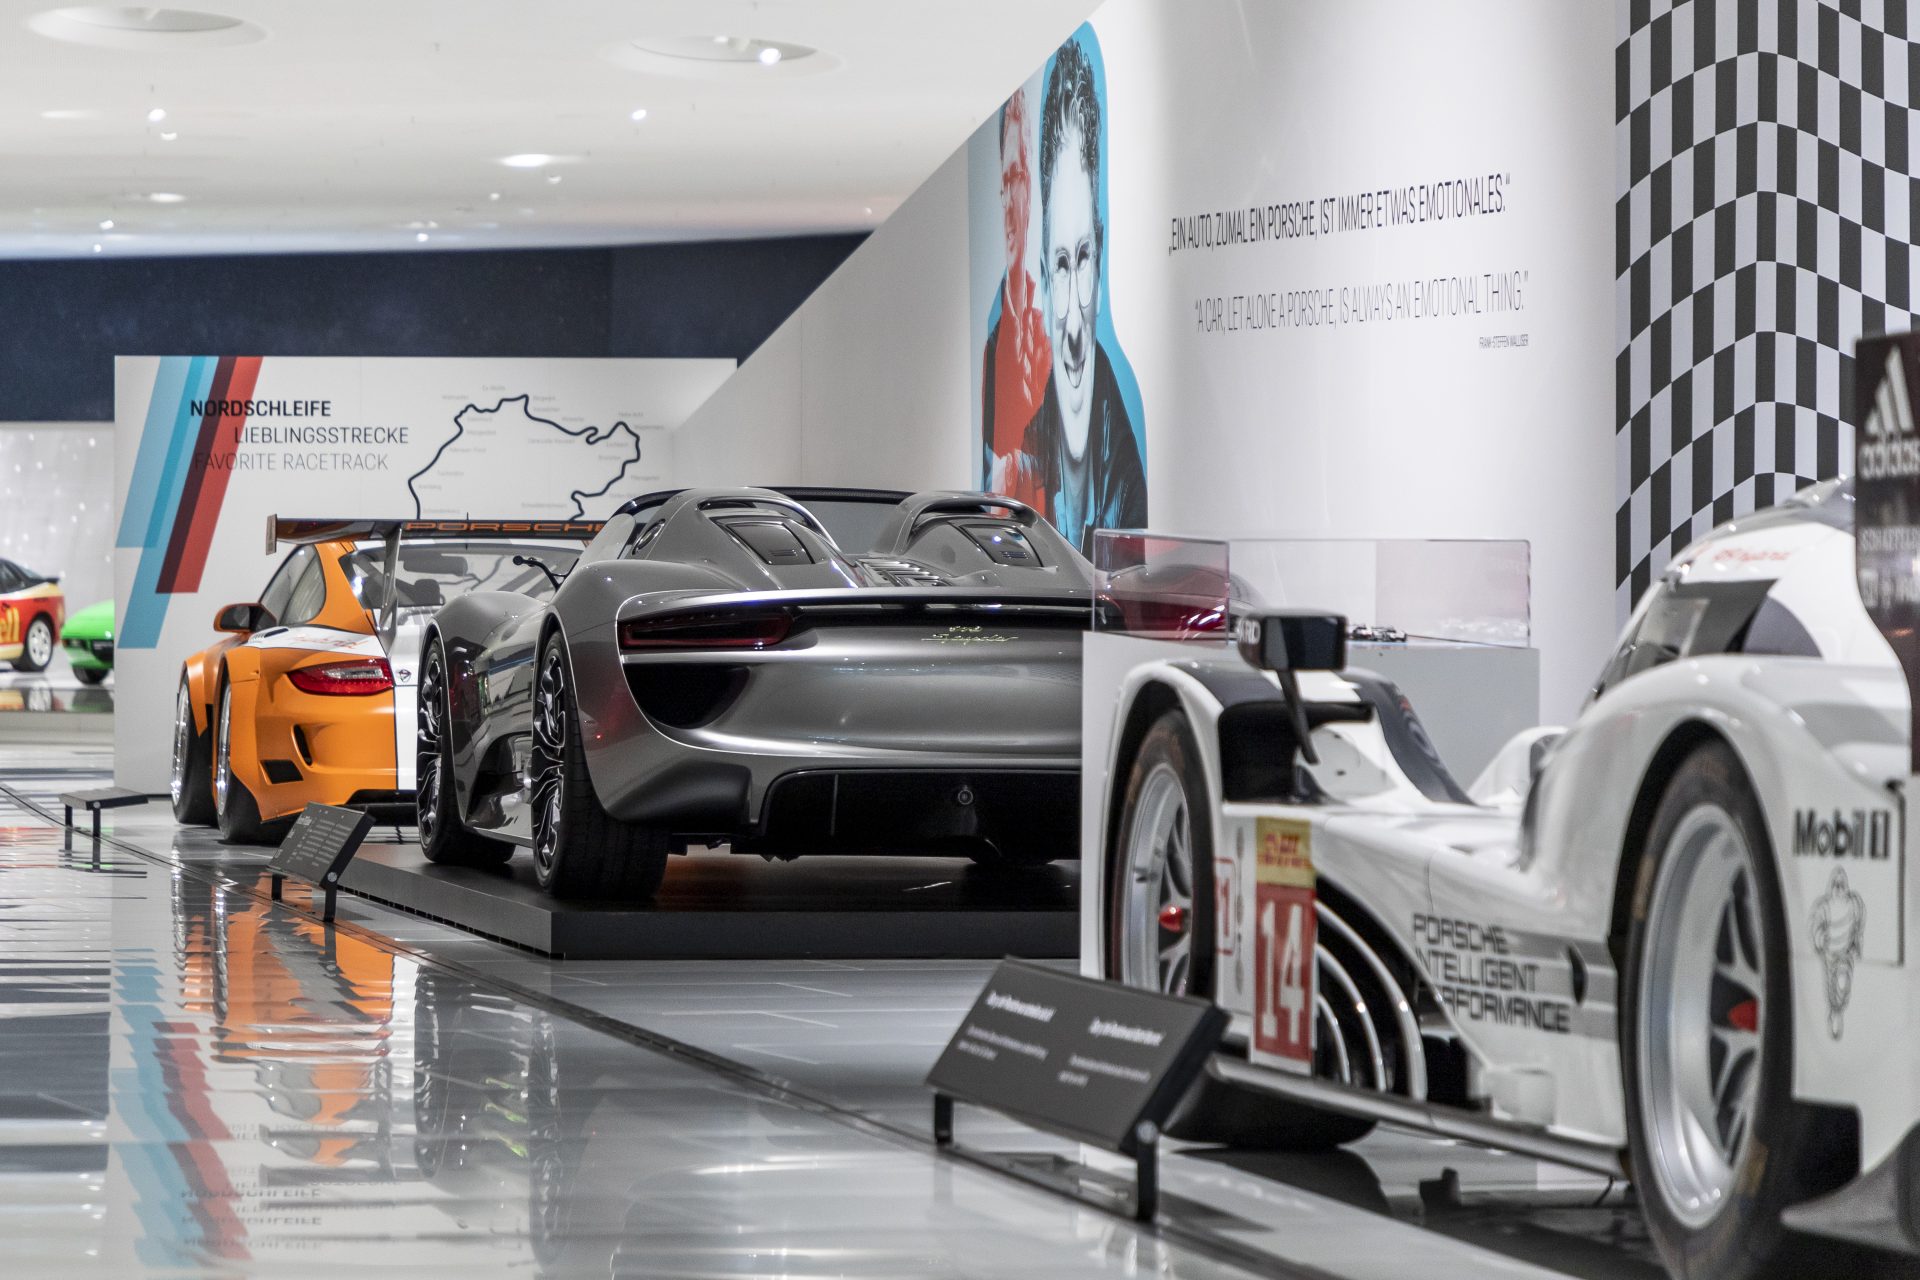 S23 1007 fine Porsche Museum: New special exhibition ‘75 Years of Porsche Sports Cars’